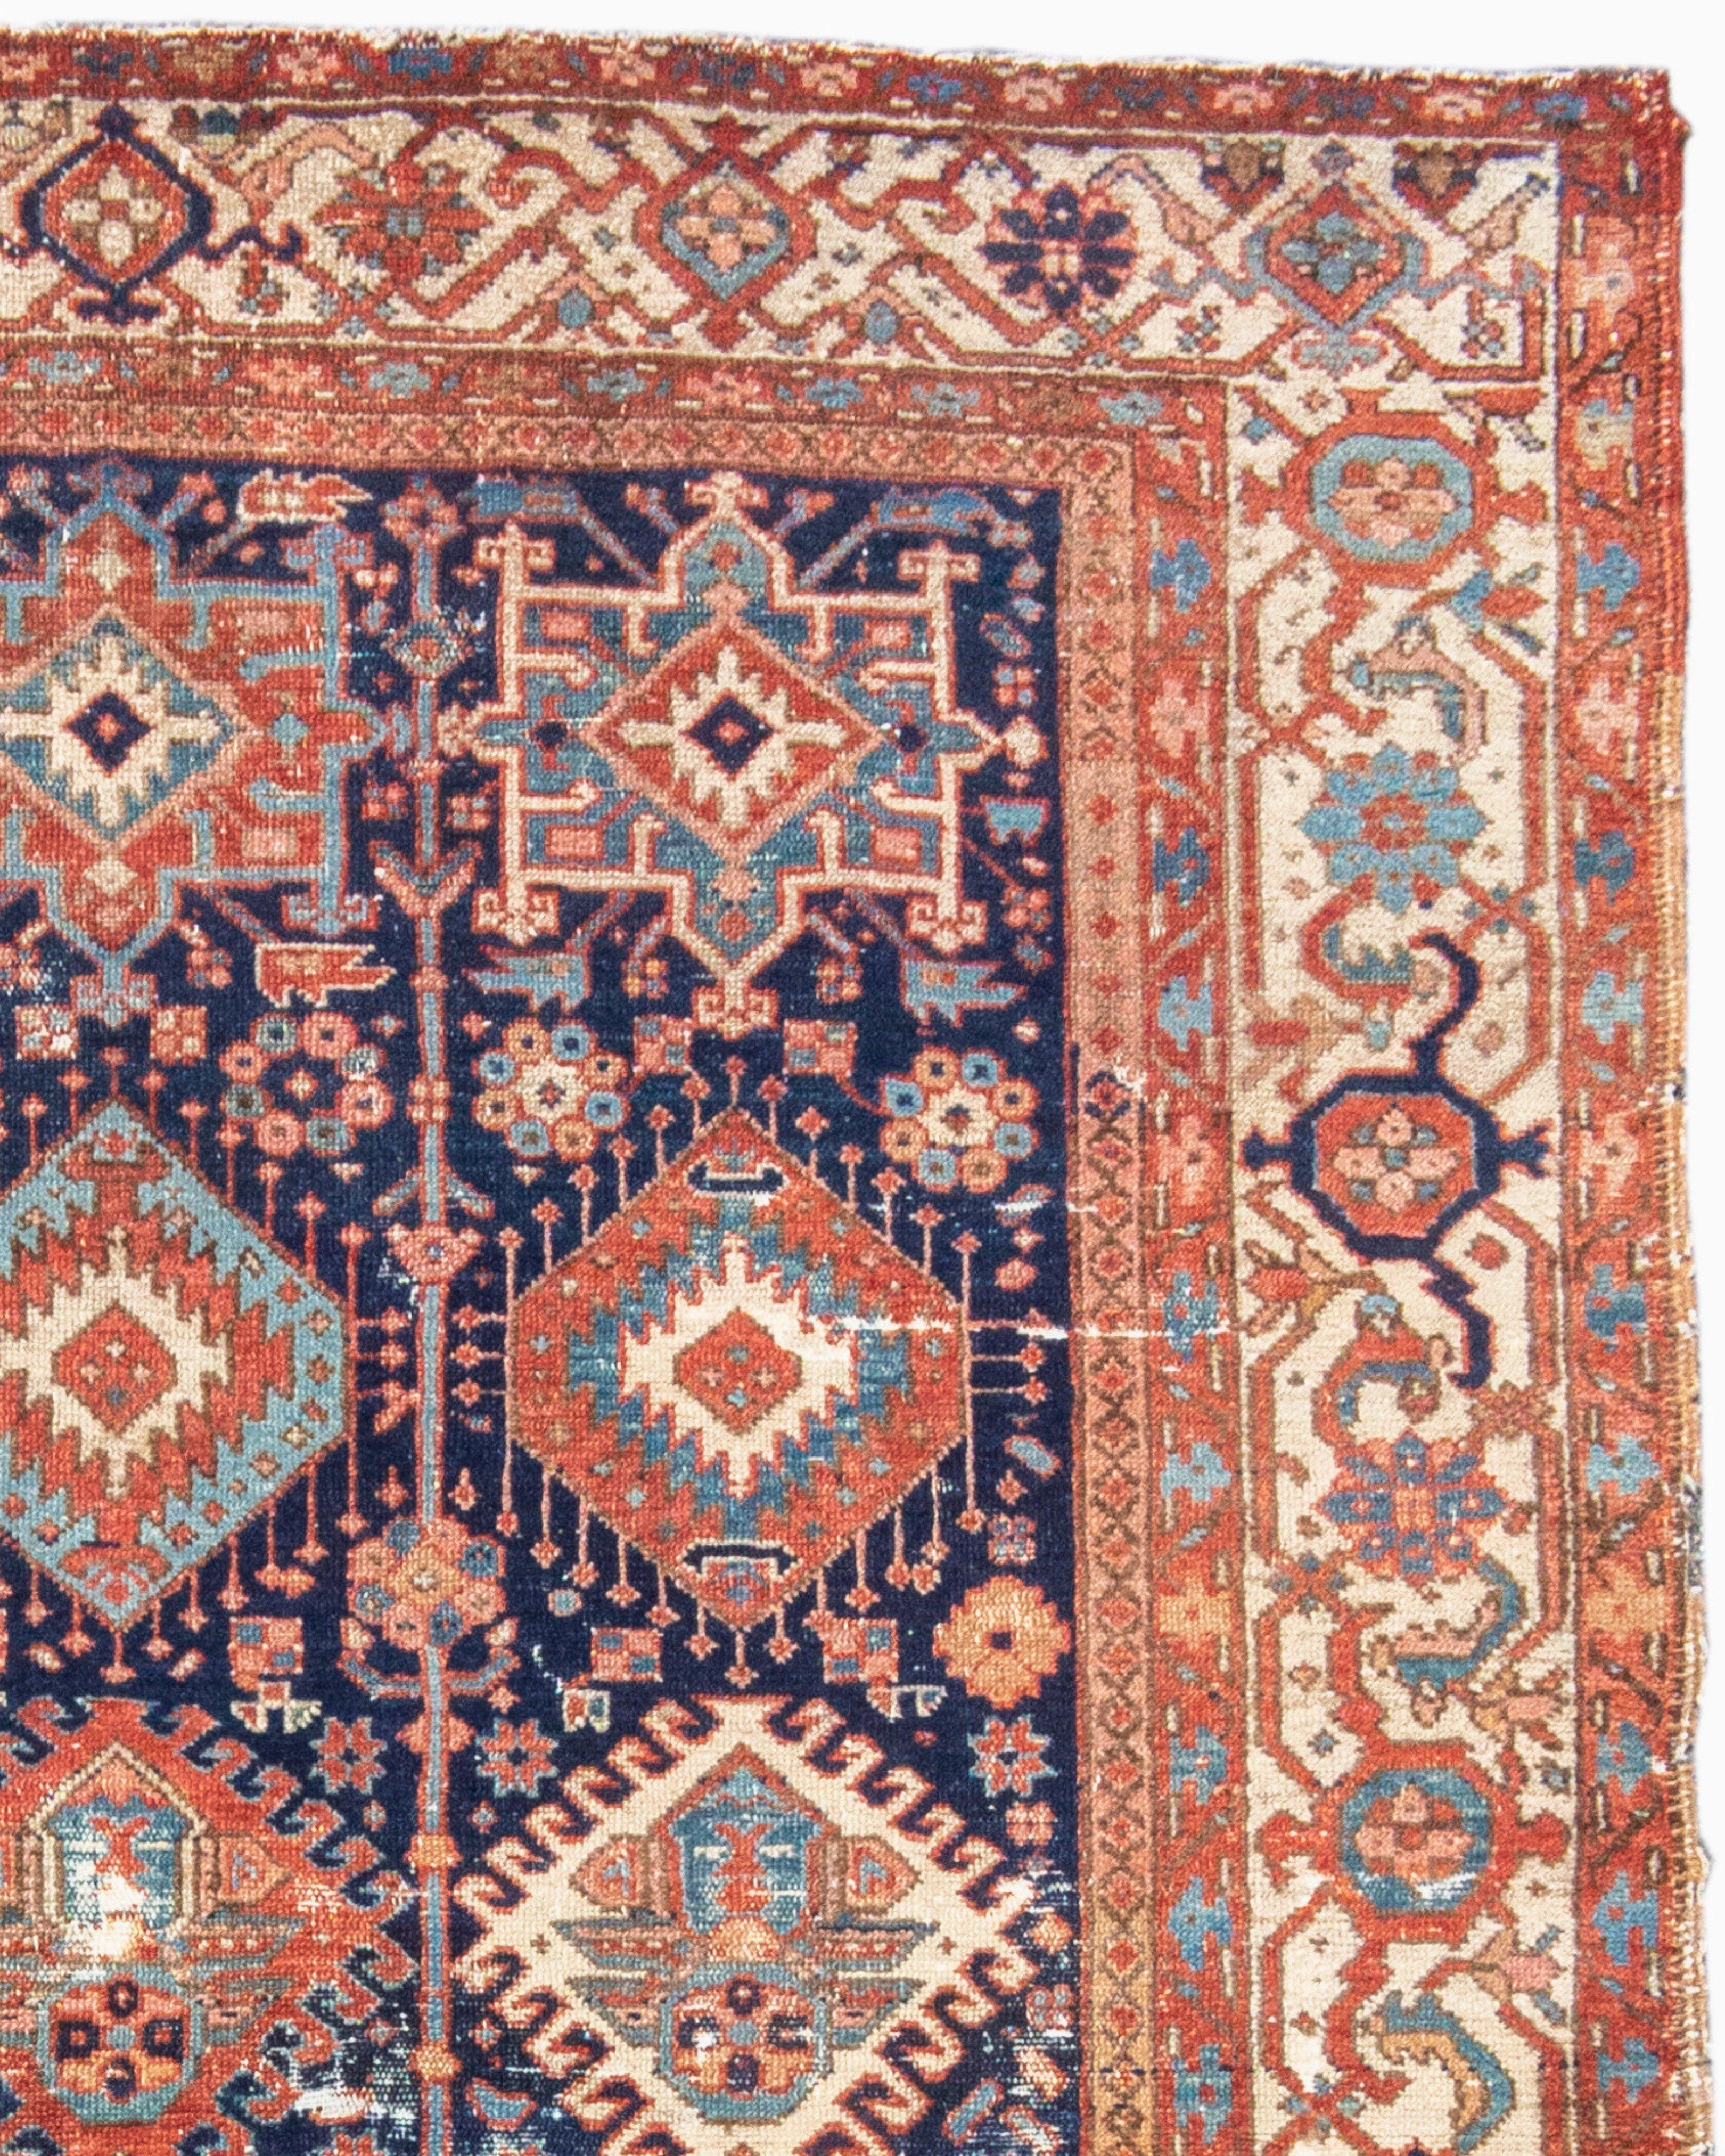 Hand-Woven Antique Persian Karaja Rug, c. 1900 For Sale